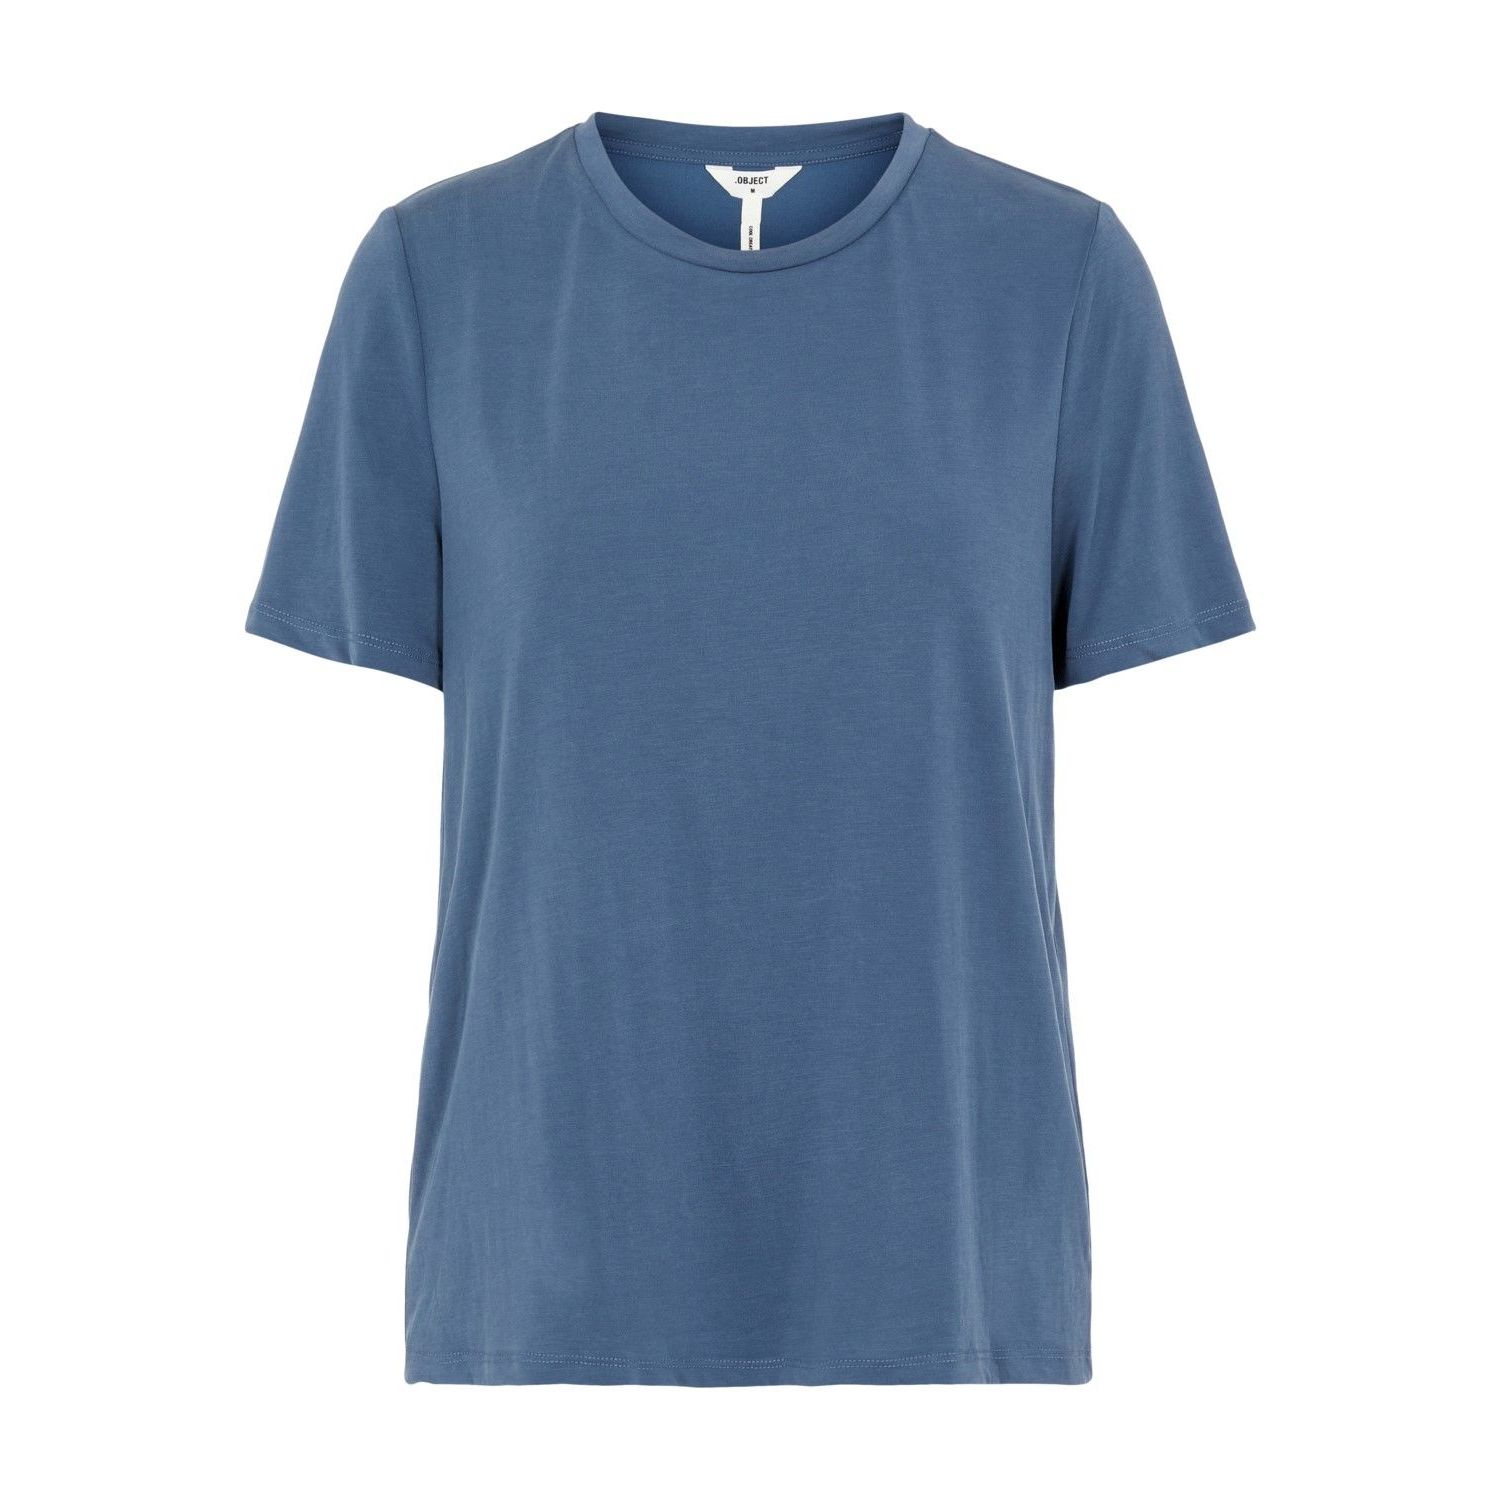 Object objannie s/s t-shirt ensign blue